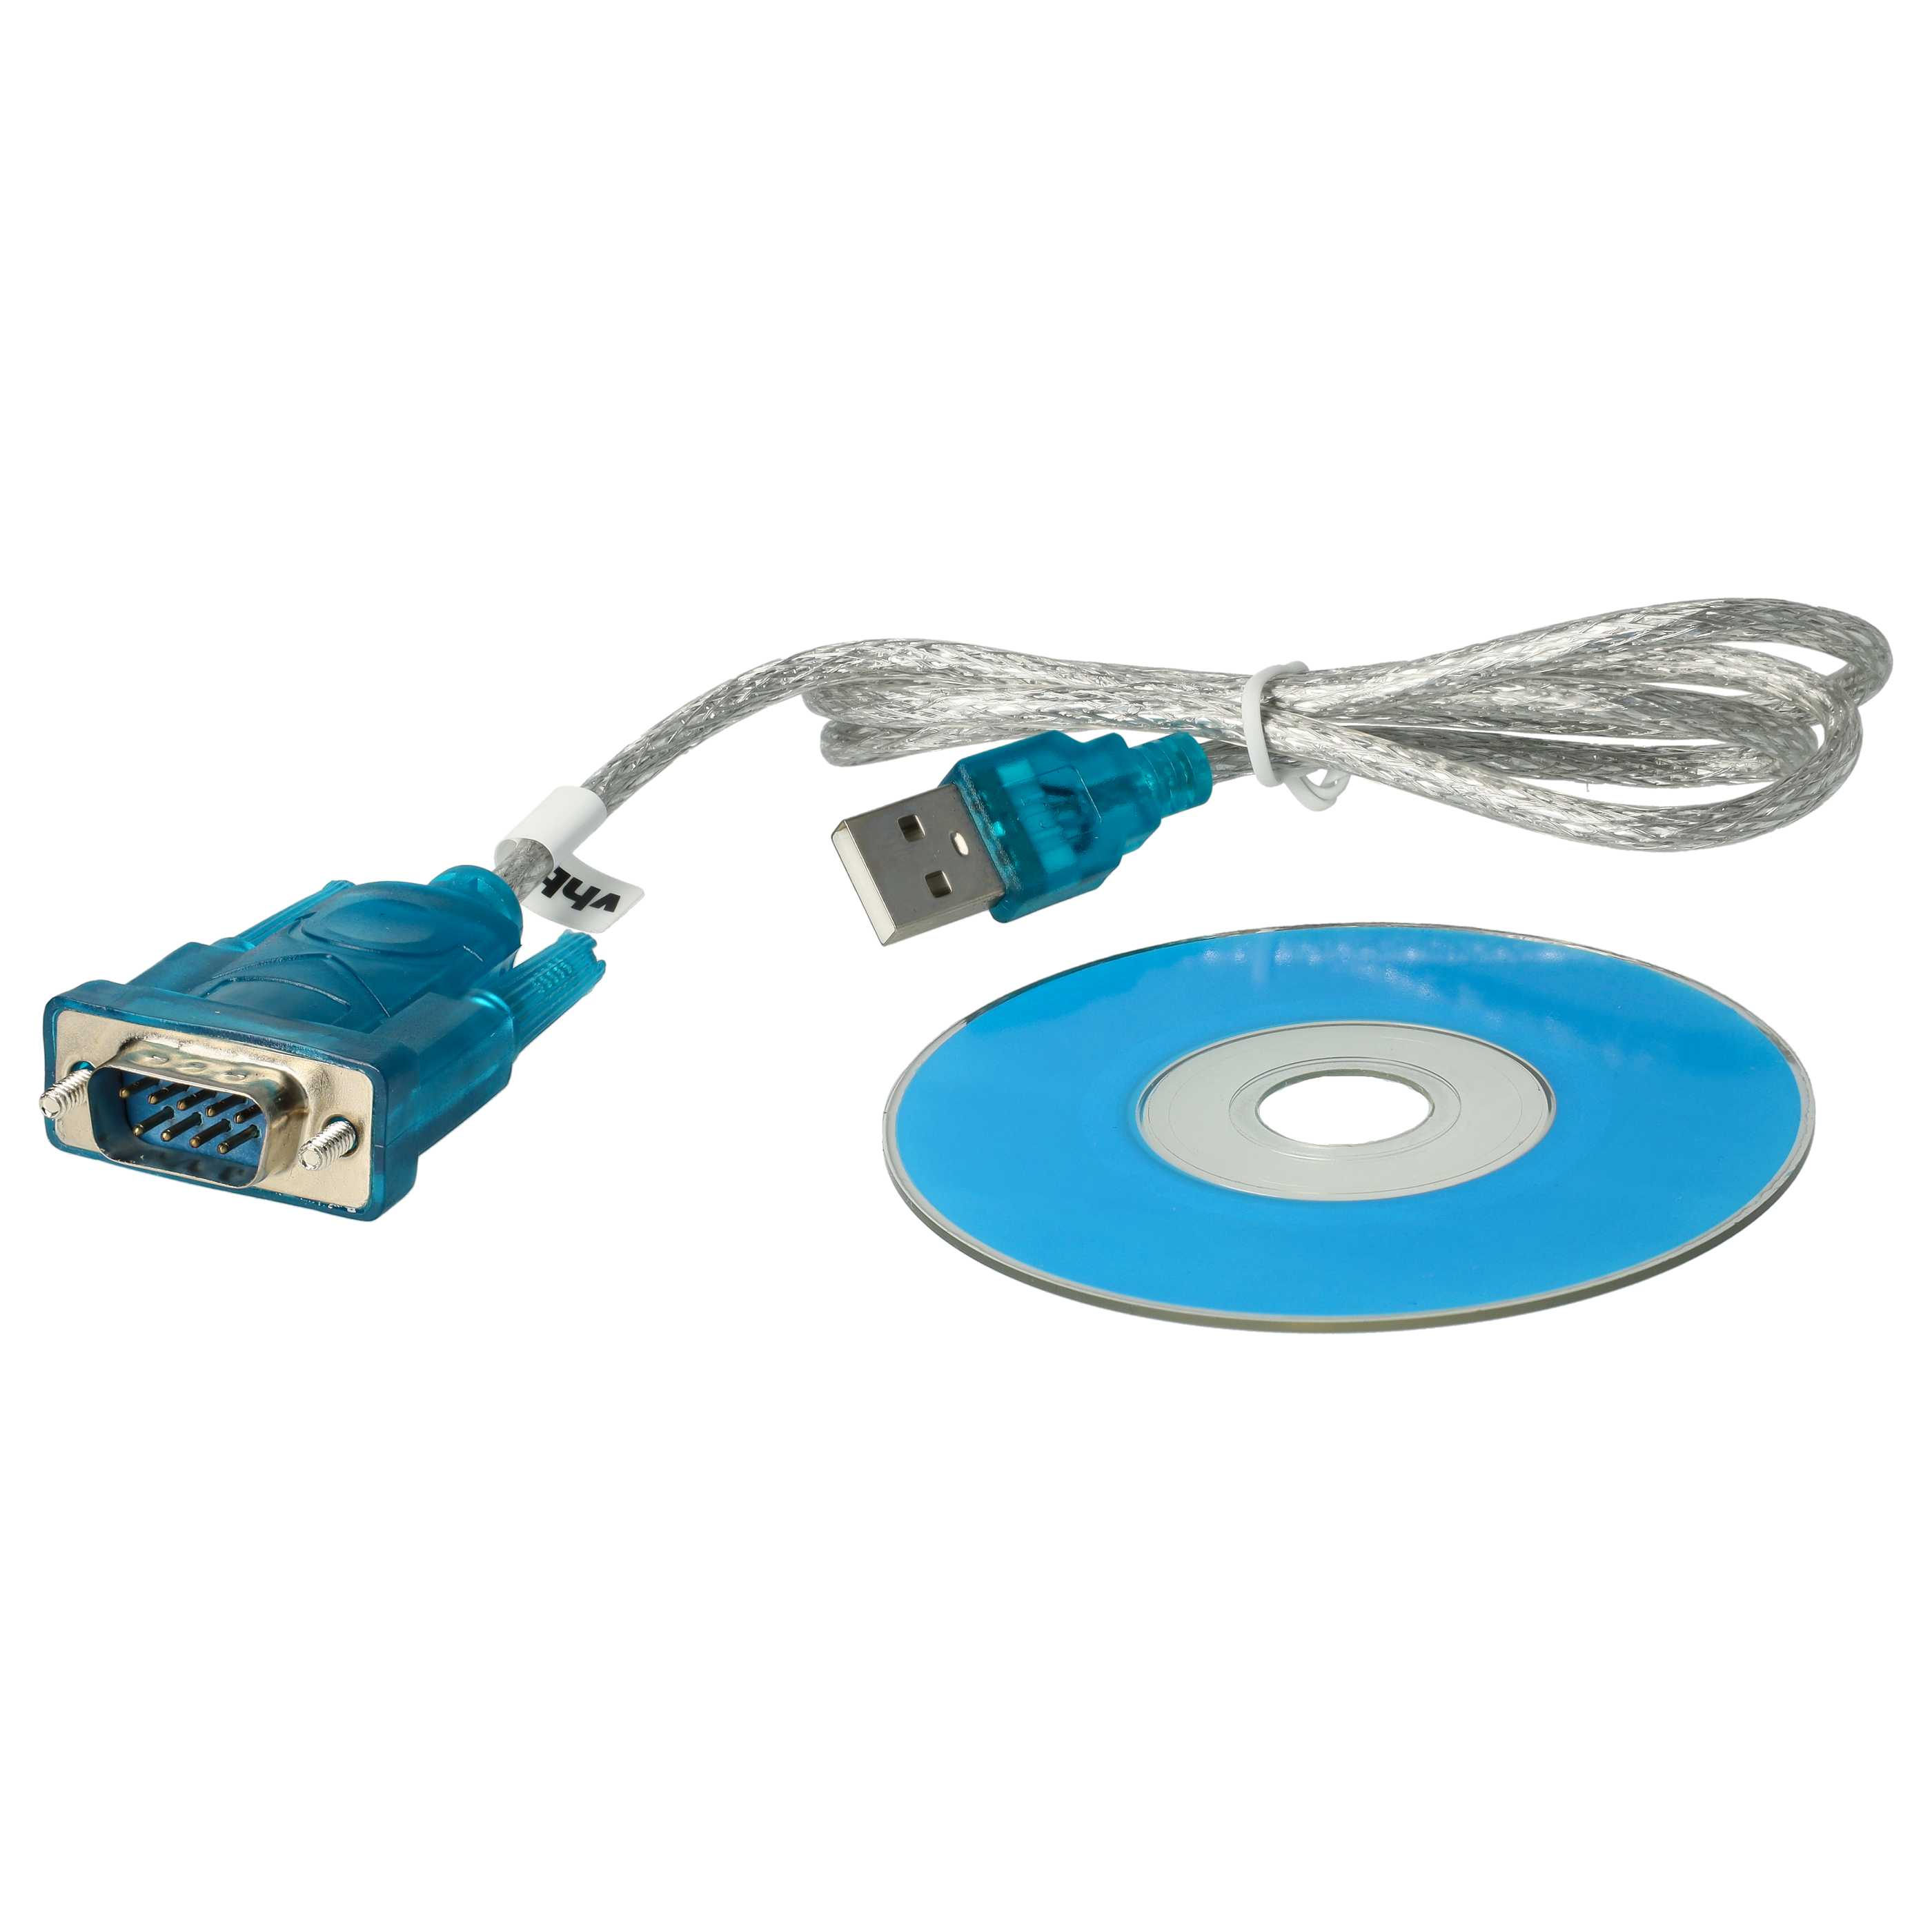 vhbw USB 2.0 auf Seriell Adapter für Desktopcomputer, Laptop - USB-RS232 Adapterkabel, 80 cm